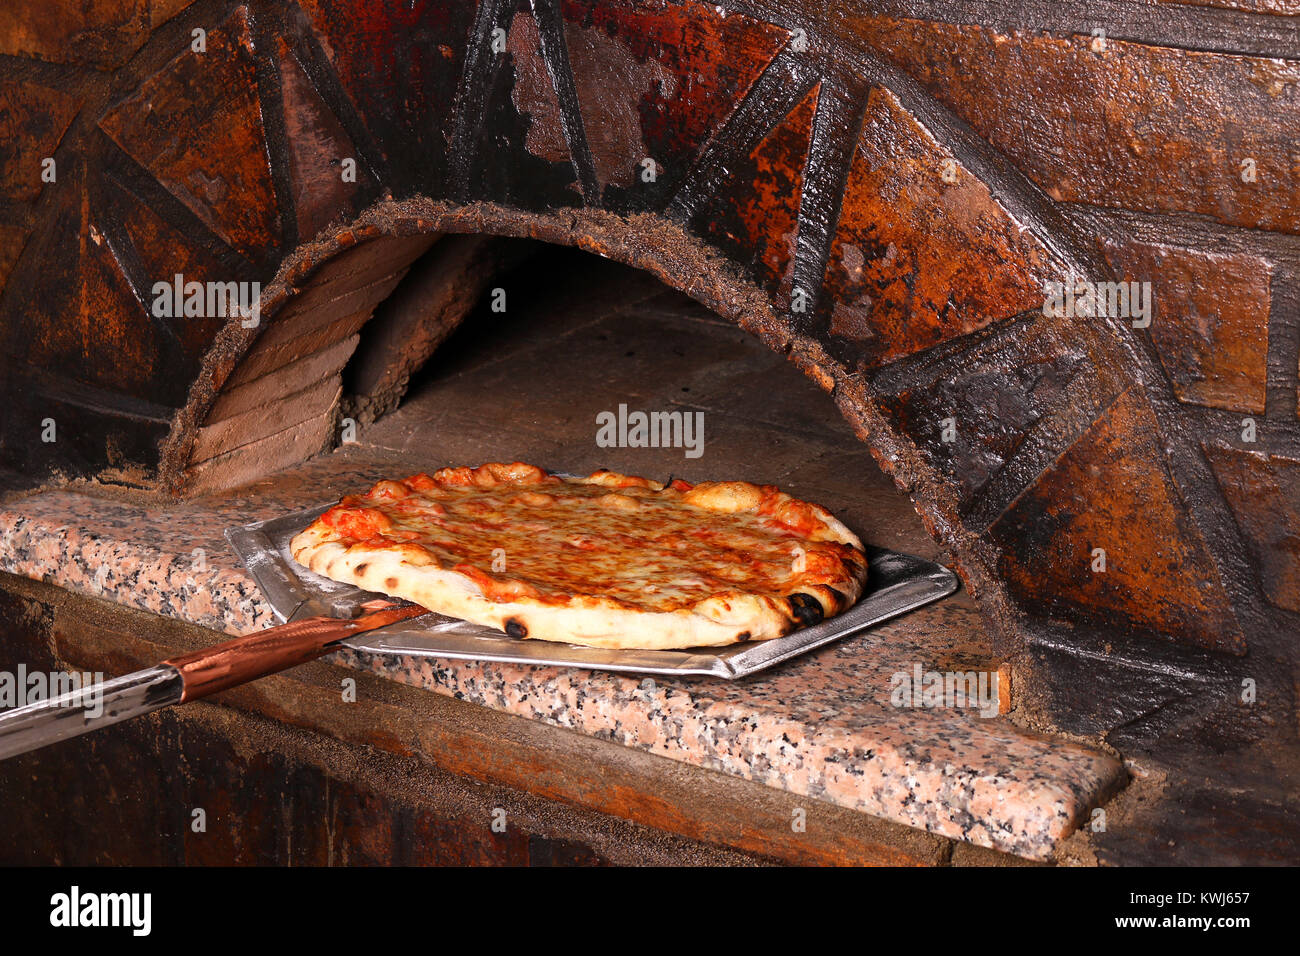 delicious pizza and brick oven Stock Photo